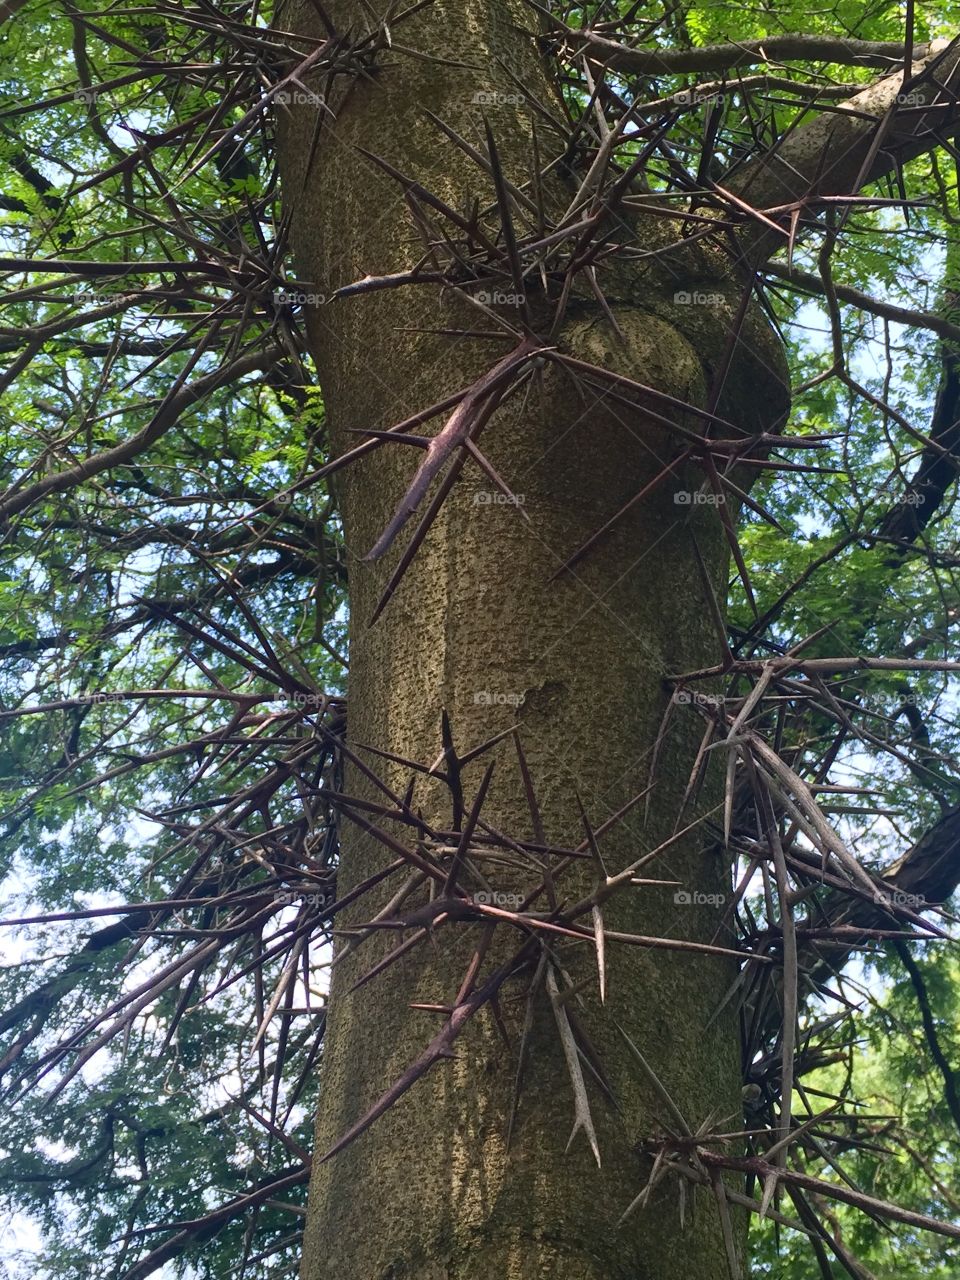 Prickly tree